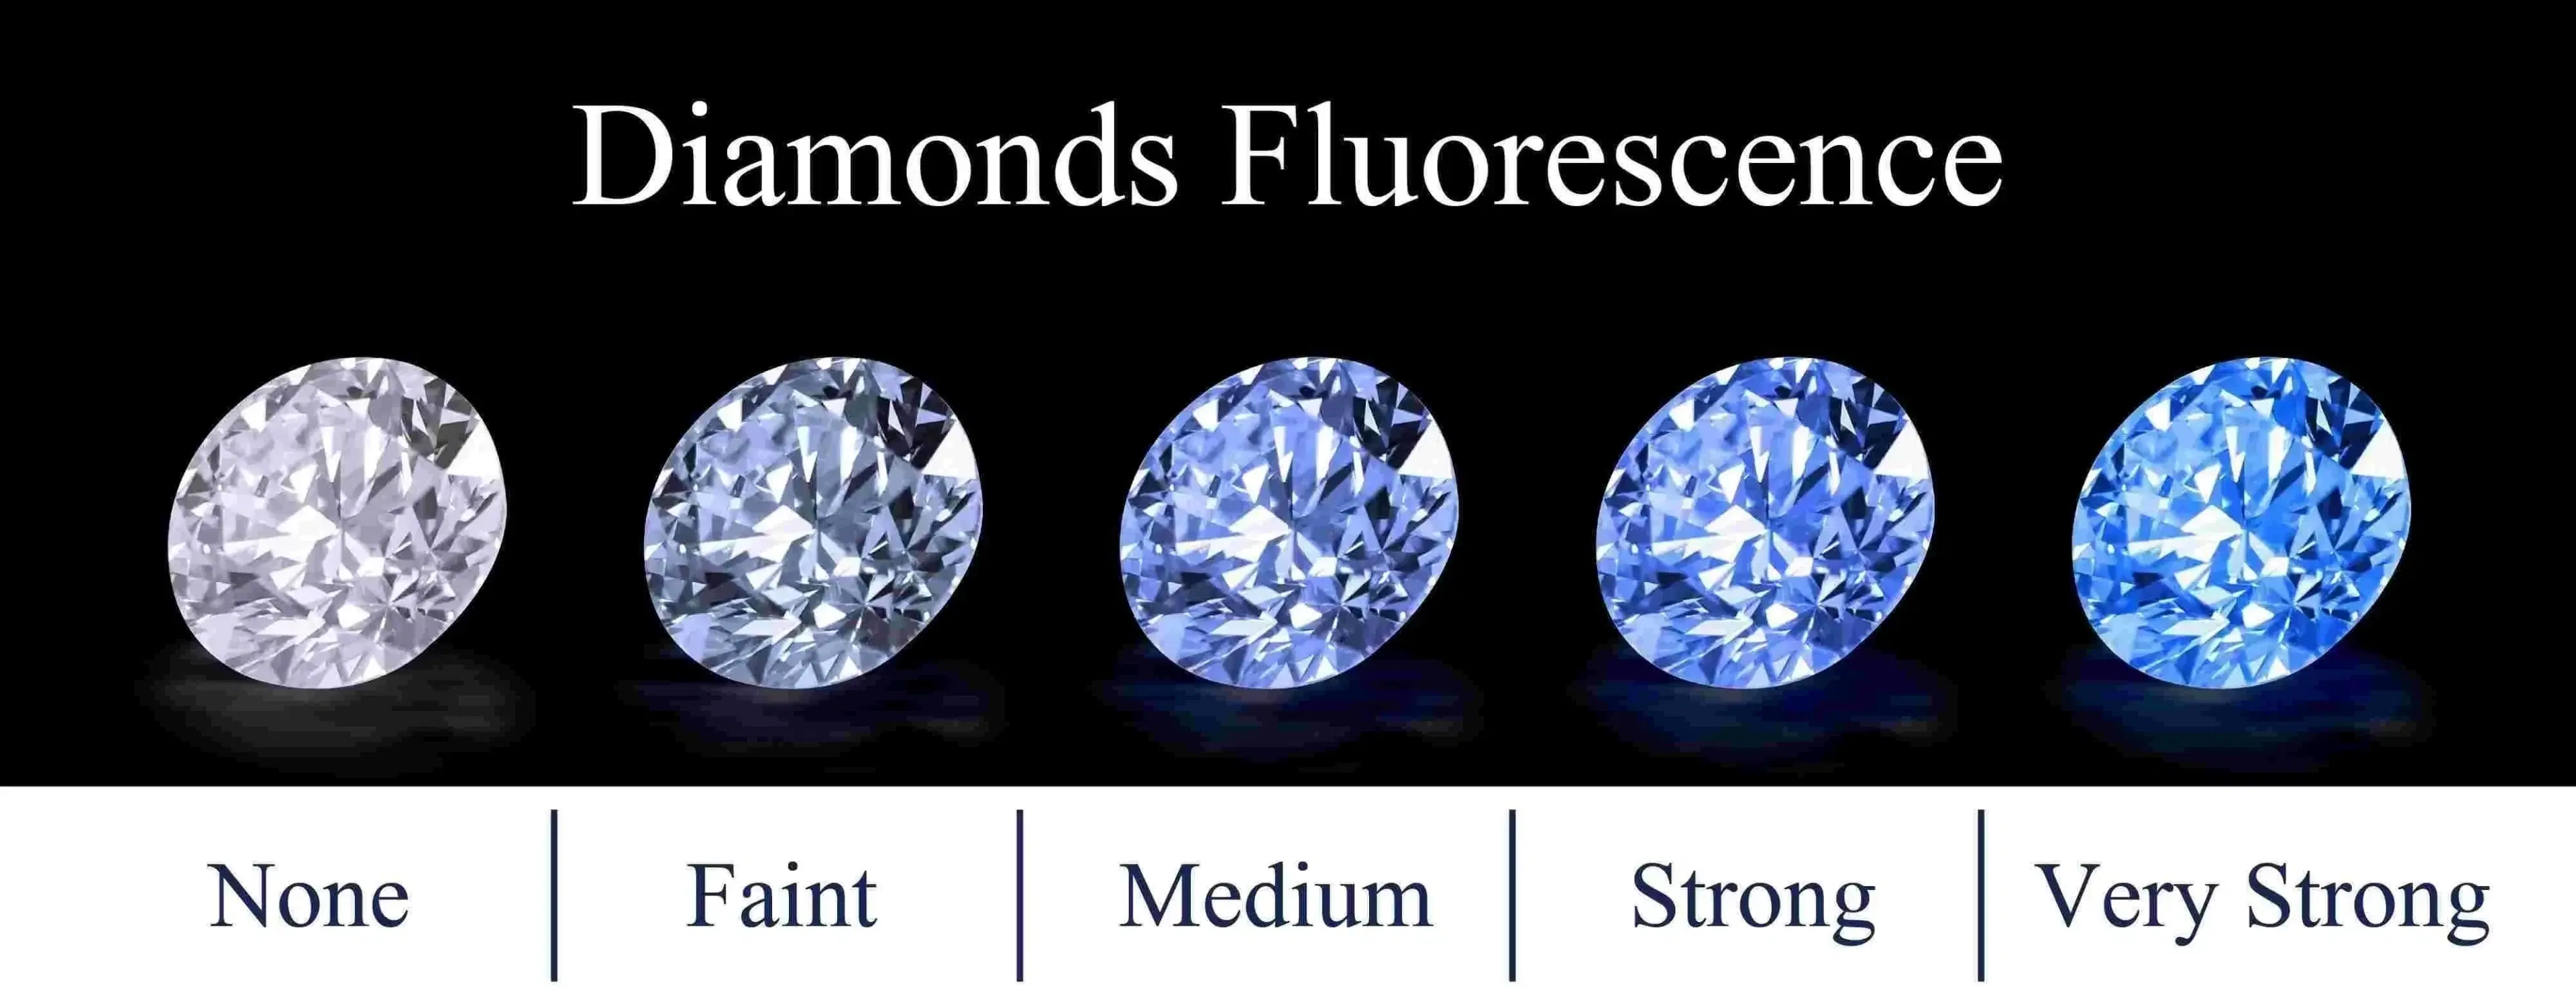 Diamond Fluorescence: Bad or Good?